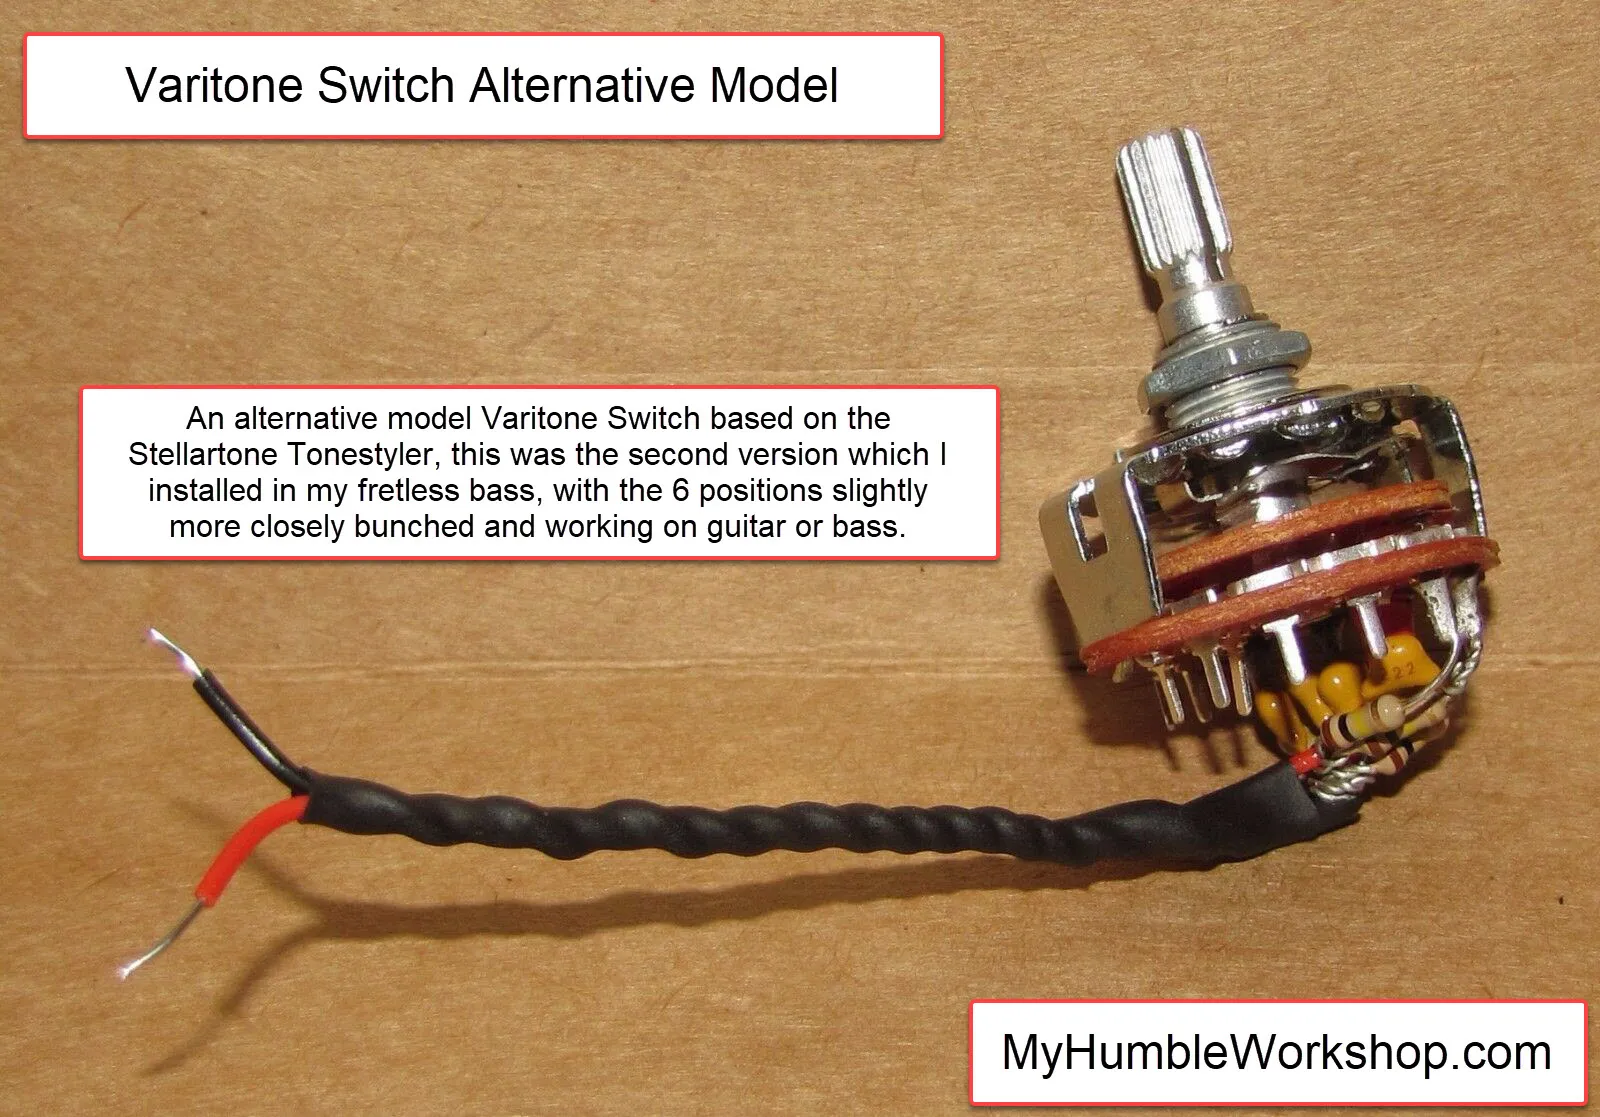 Varitone Switch Alternative Model